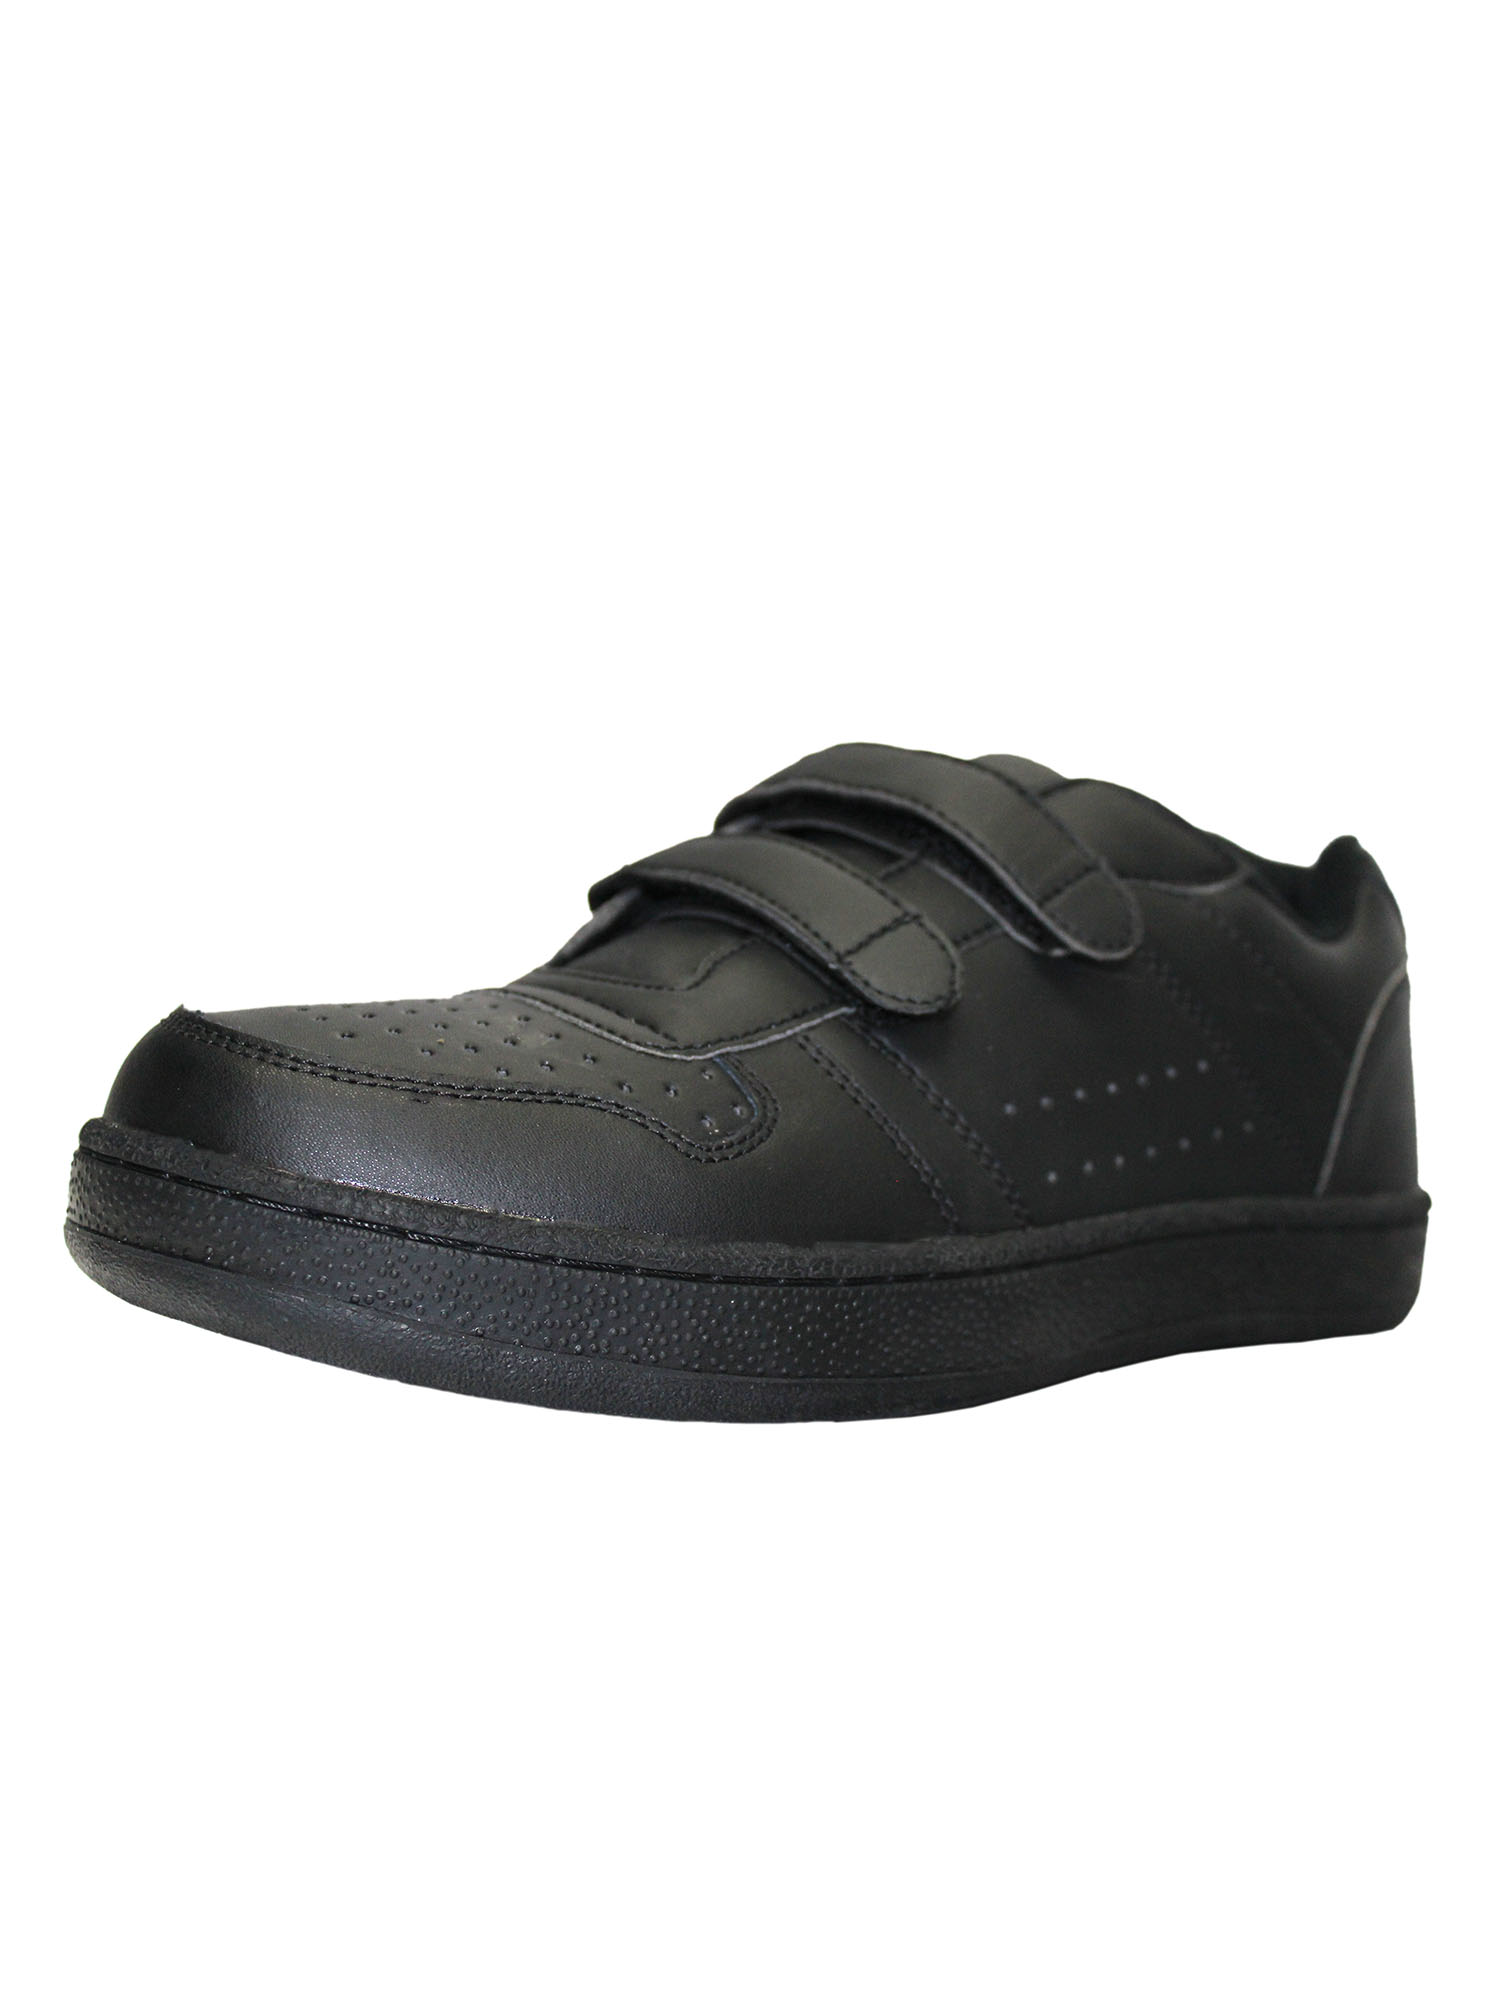 Tanleewa Men's Leather Strap Sneakers Lightweight Hook and Loop Walking Shoe Size 14 Adult Male - image 1 of 4